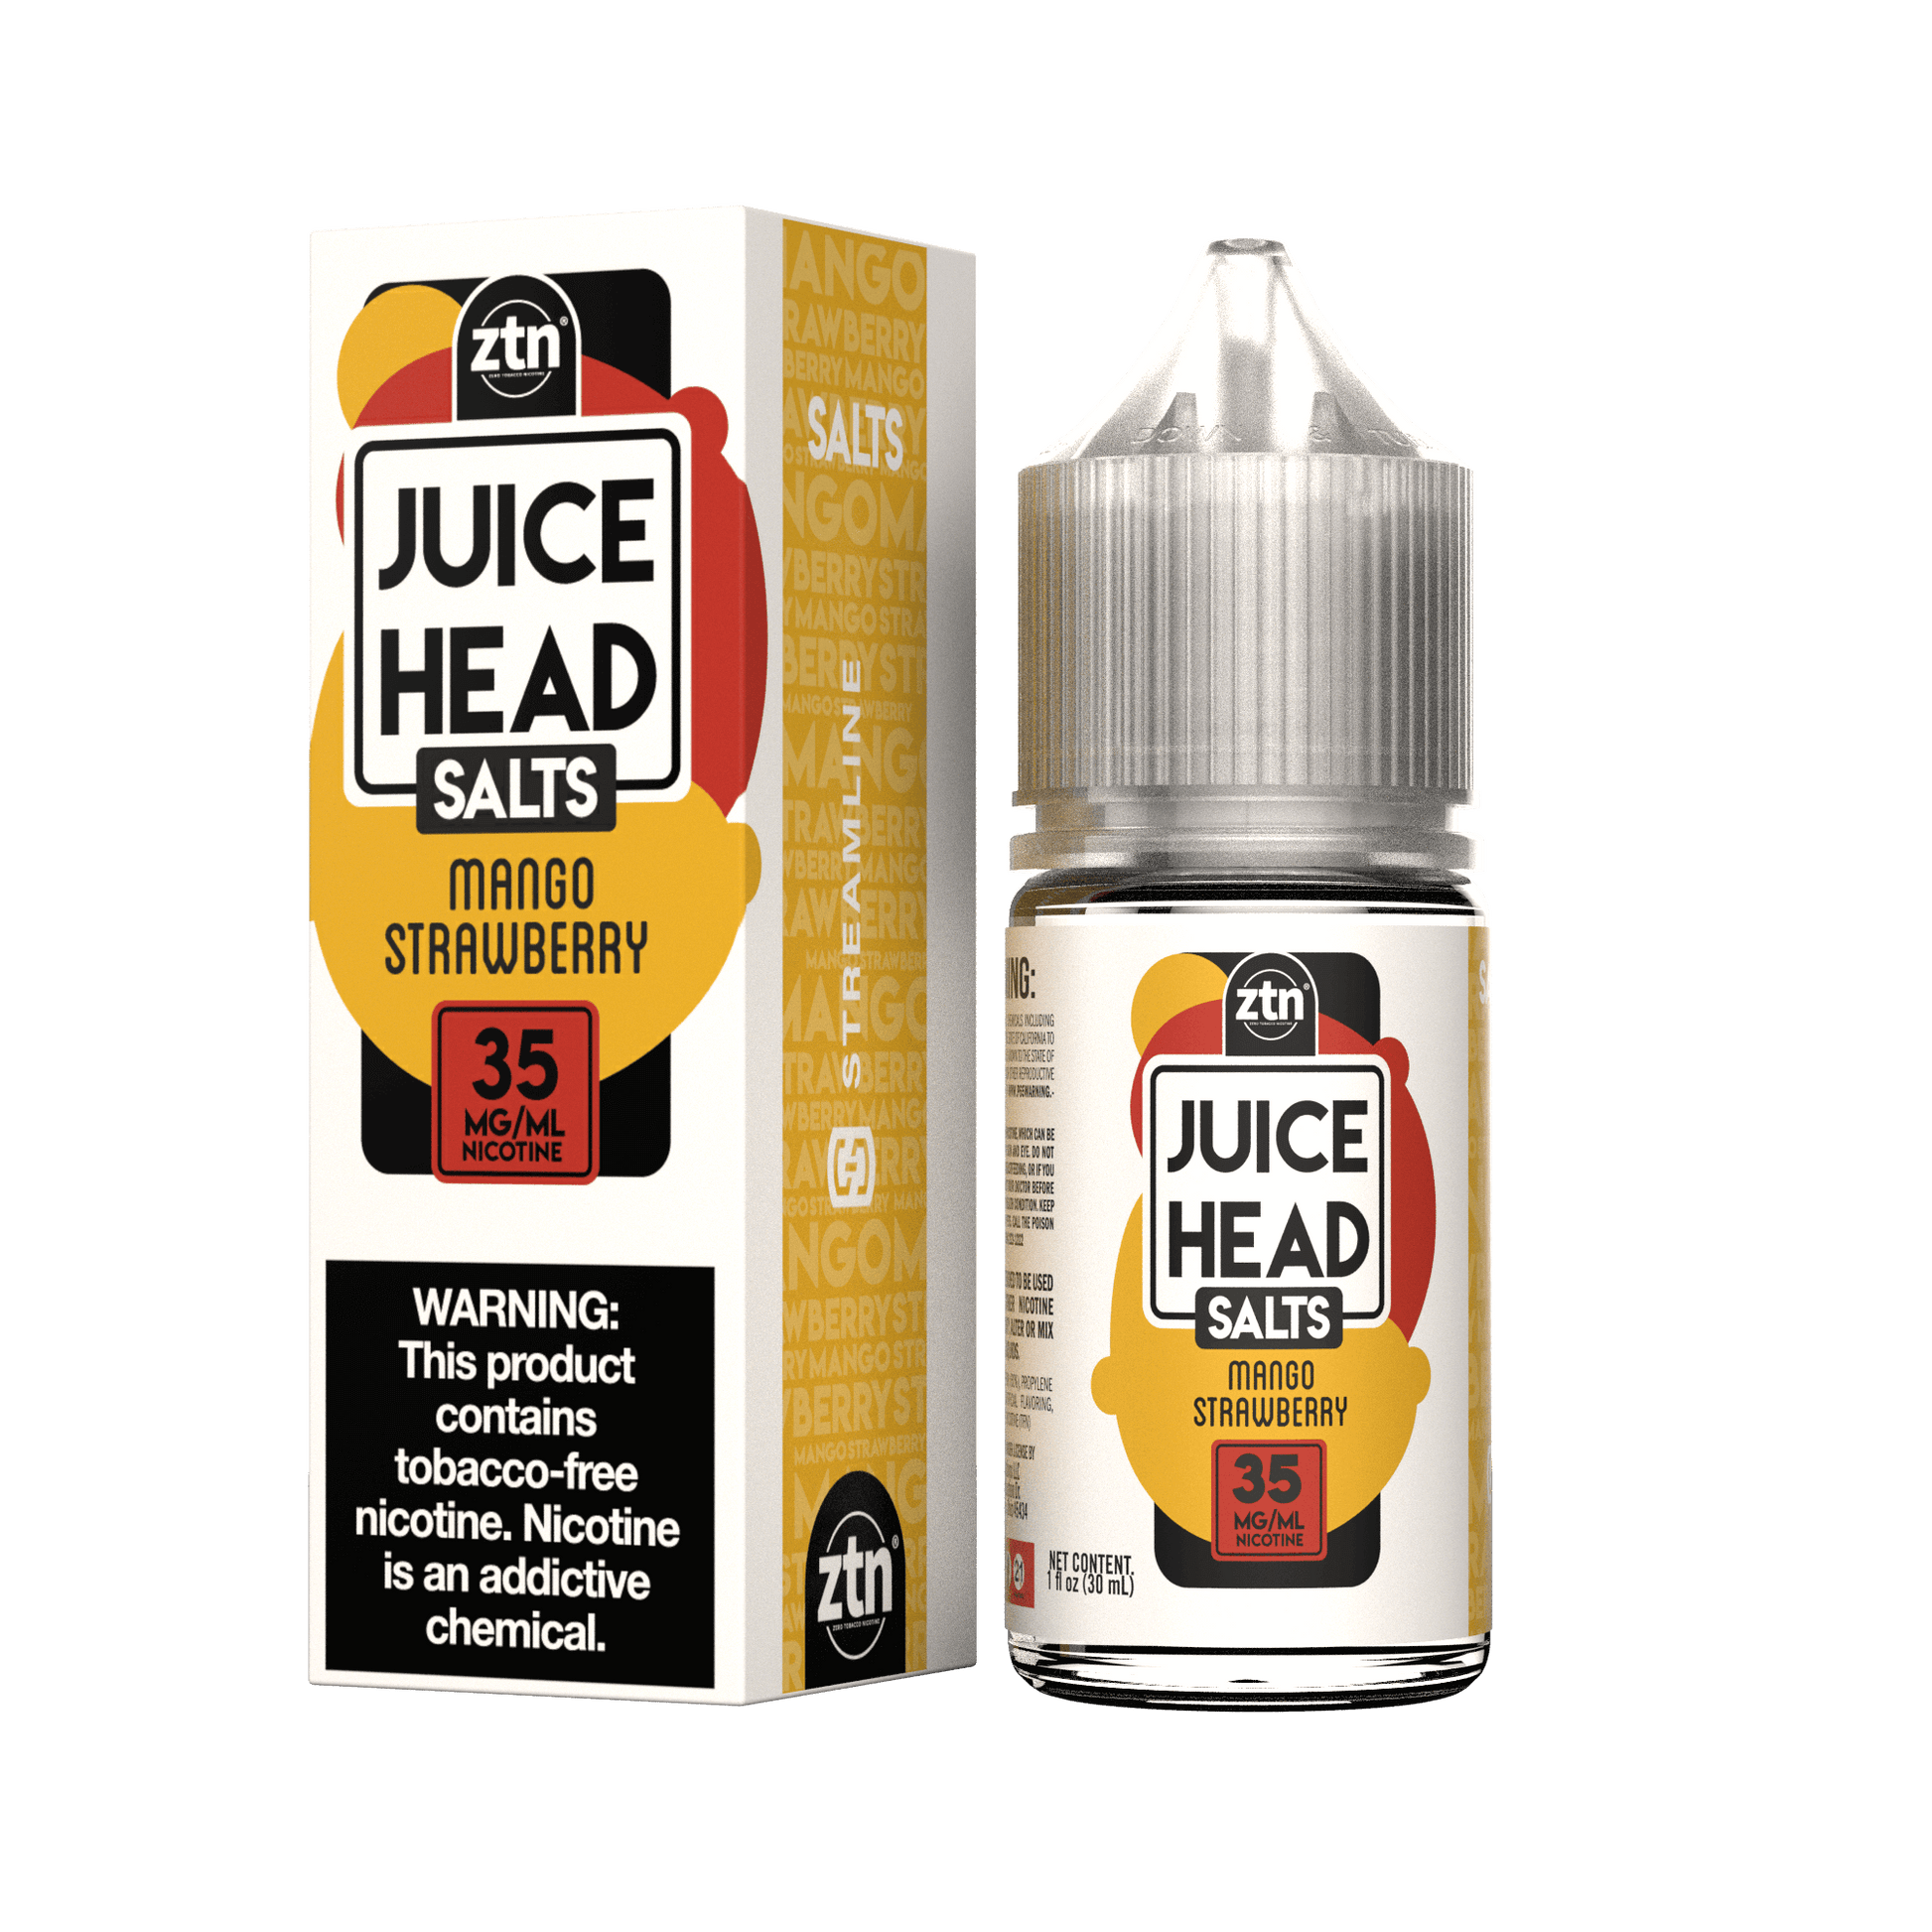 Juice Head Salt Series E-Liquid 30mL (Salt Nic)| Mango Strawberry with packaging